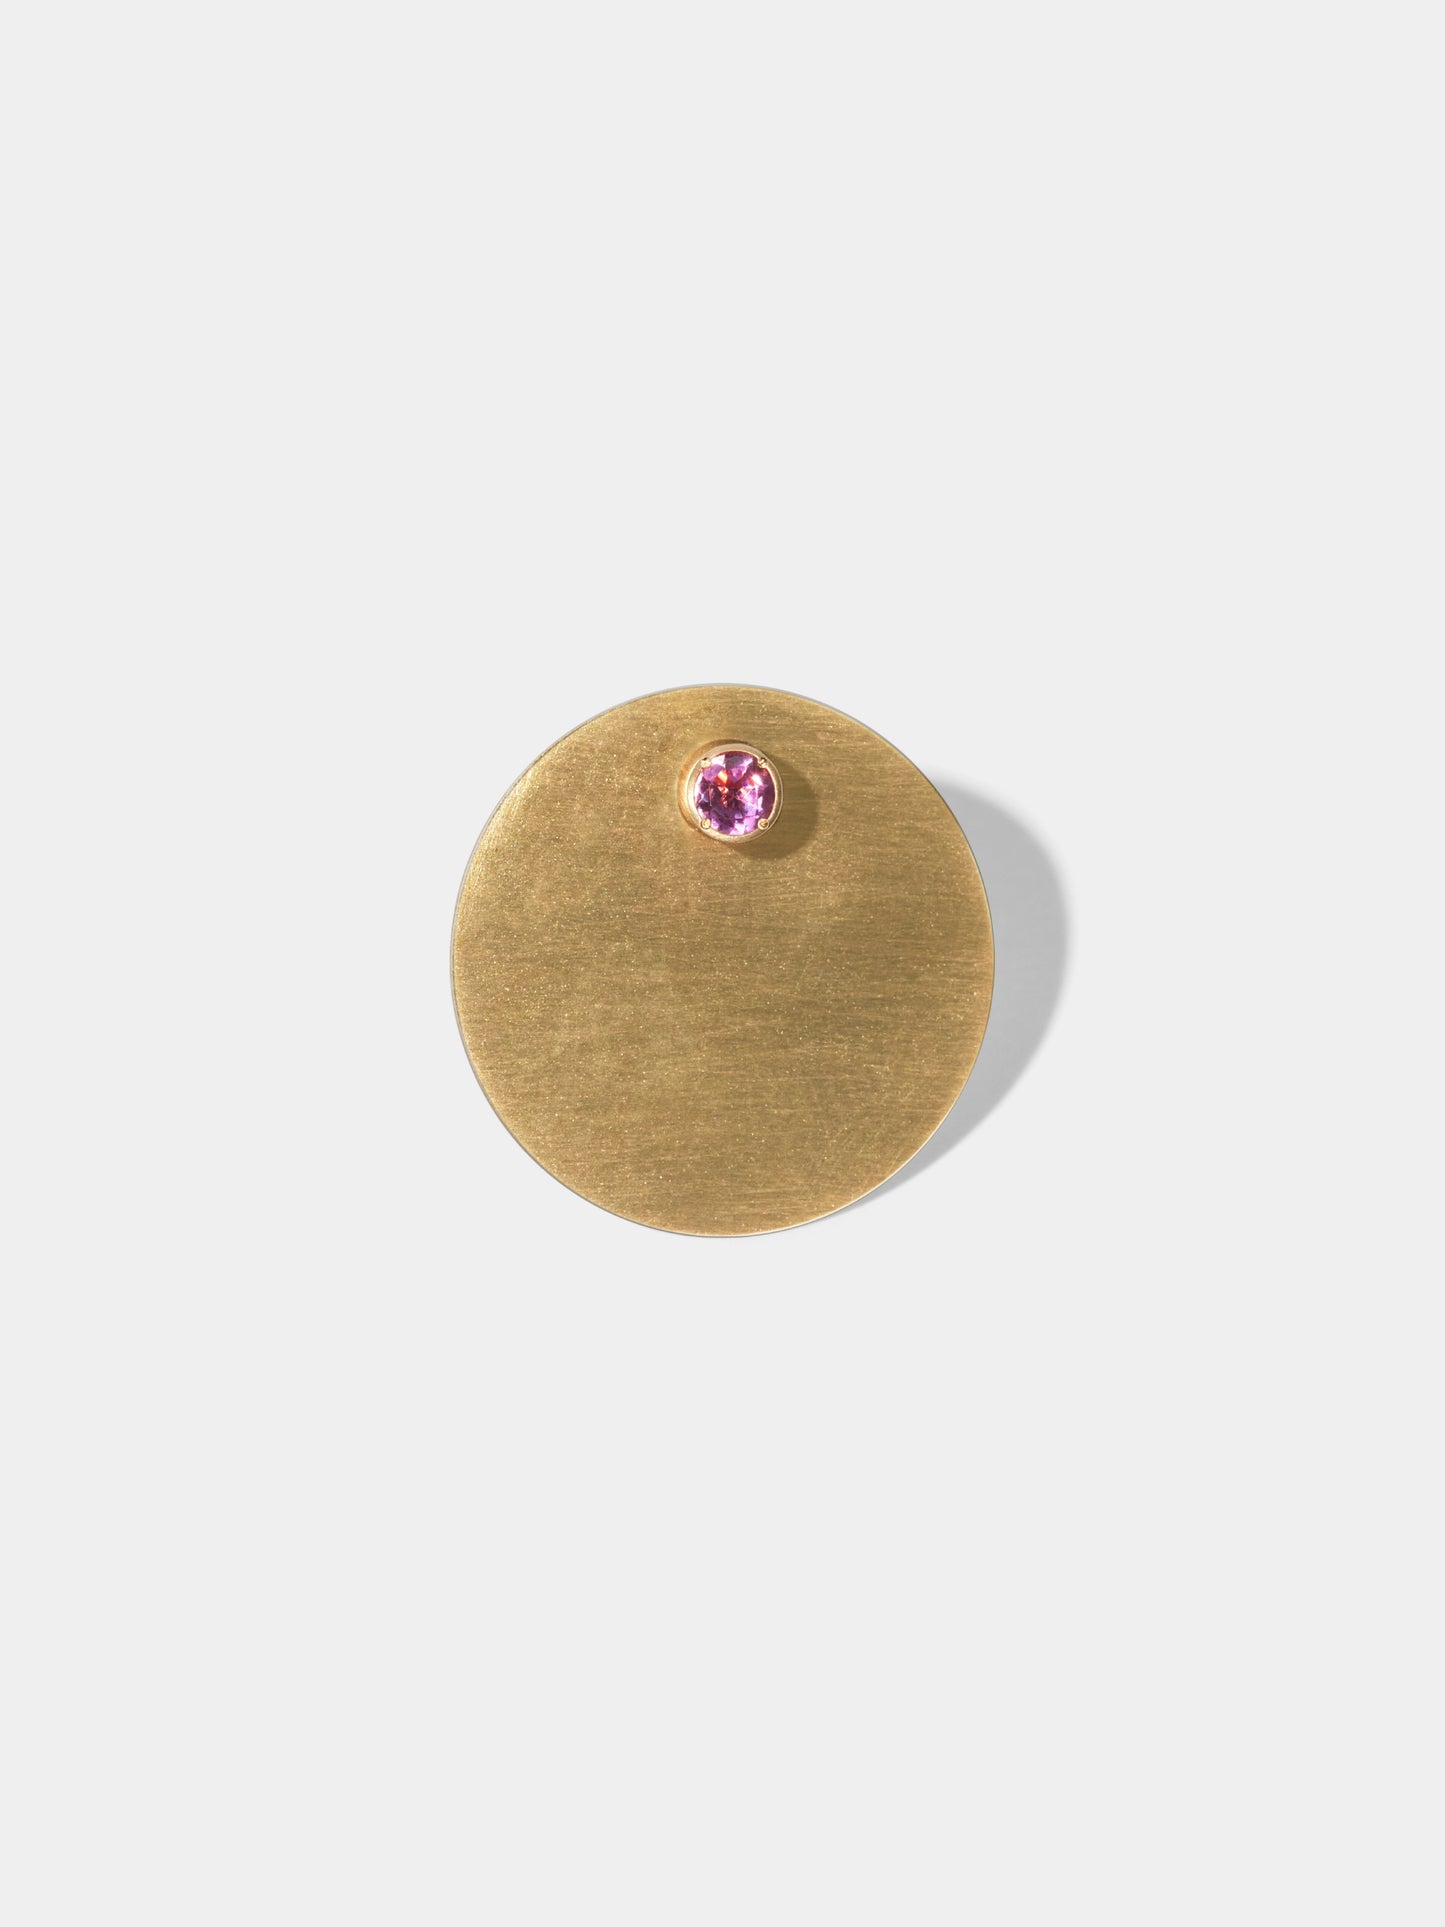 ASTERISM_Pierced Earring_Full Moon (満月) / Pink Tourmaline